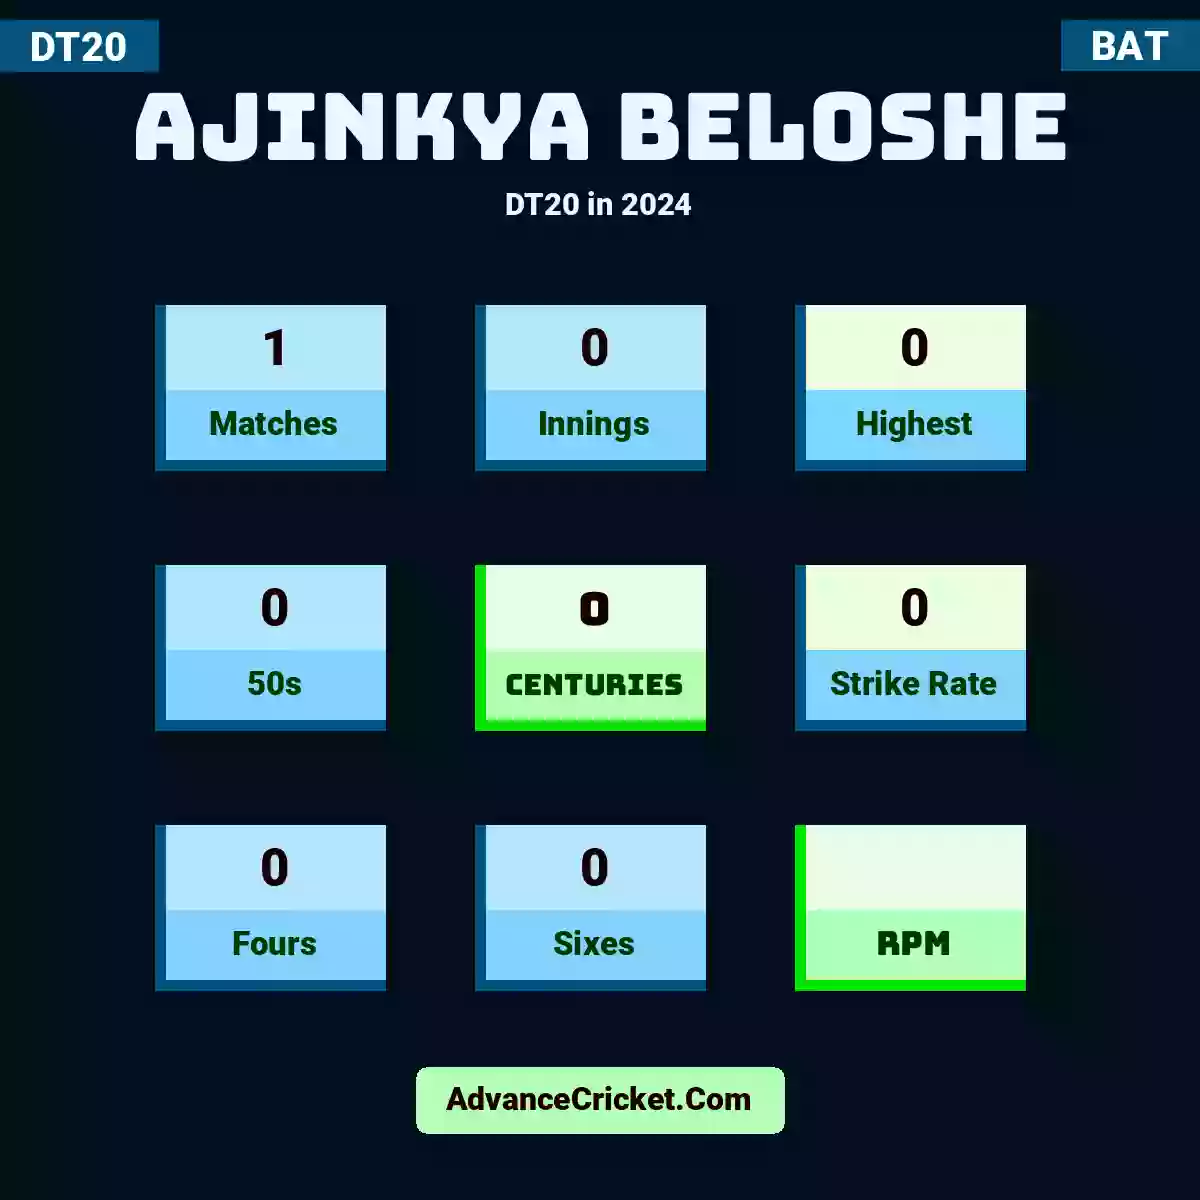 Ajinkya Beloshe DT20  in 2024, Ajinkya Beloshe played 1 matches, scored 0 runs as highest, 0 half-centuries, and 0 centuries, with a strike rate of 0. A.Beloshe hit 0 fours and 0 sixes.